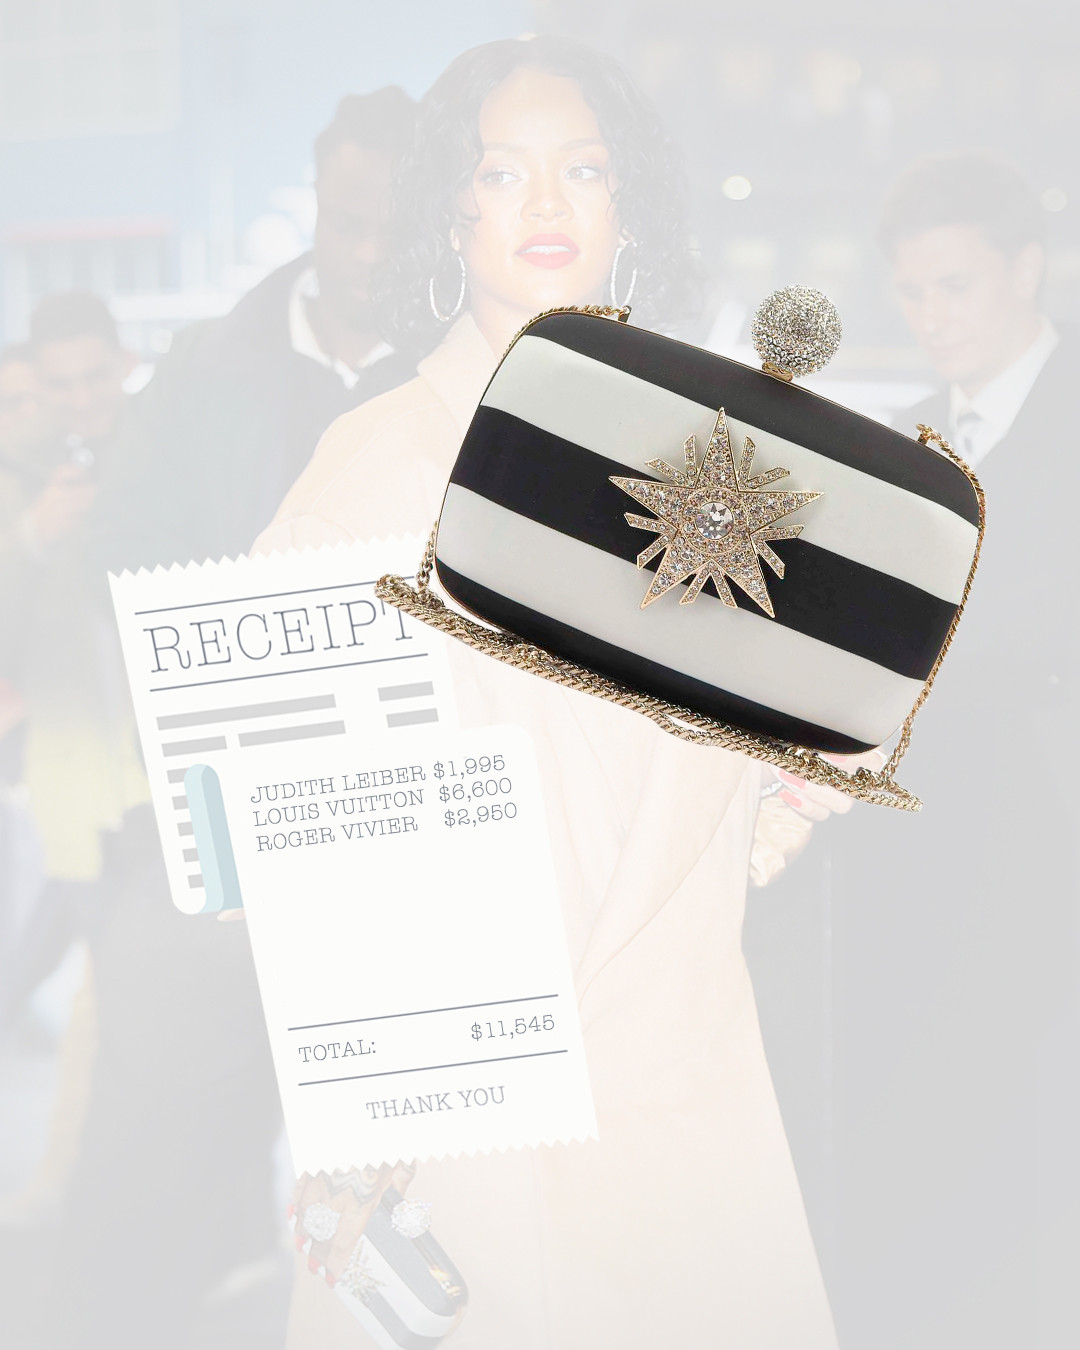 The Many Bags of Rihanna - PurseBlog